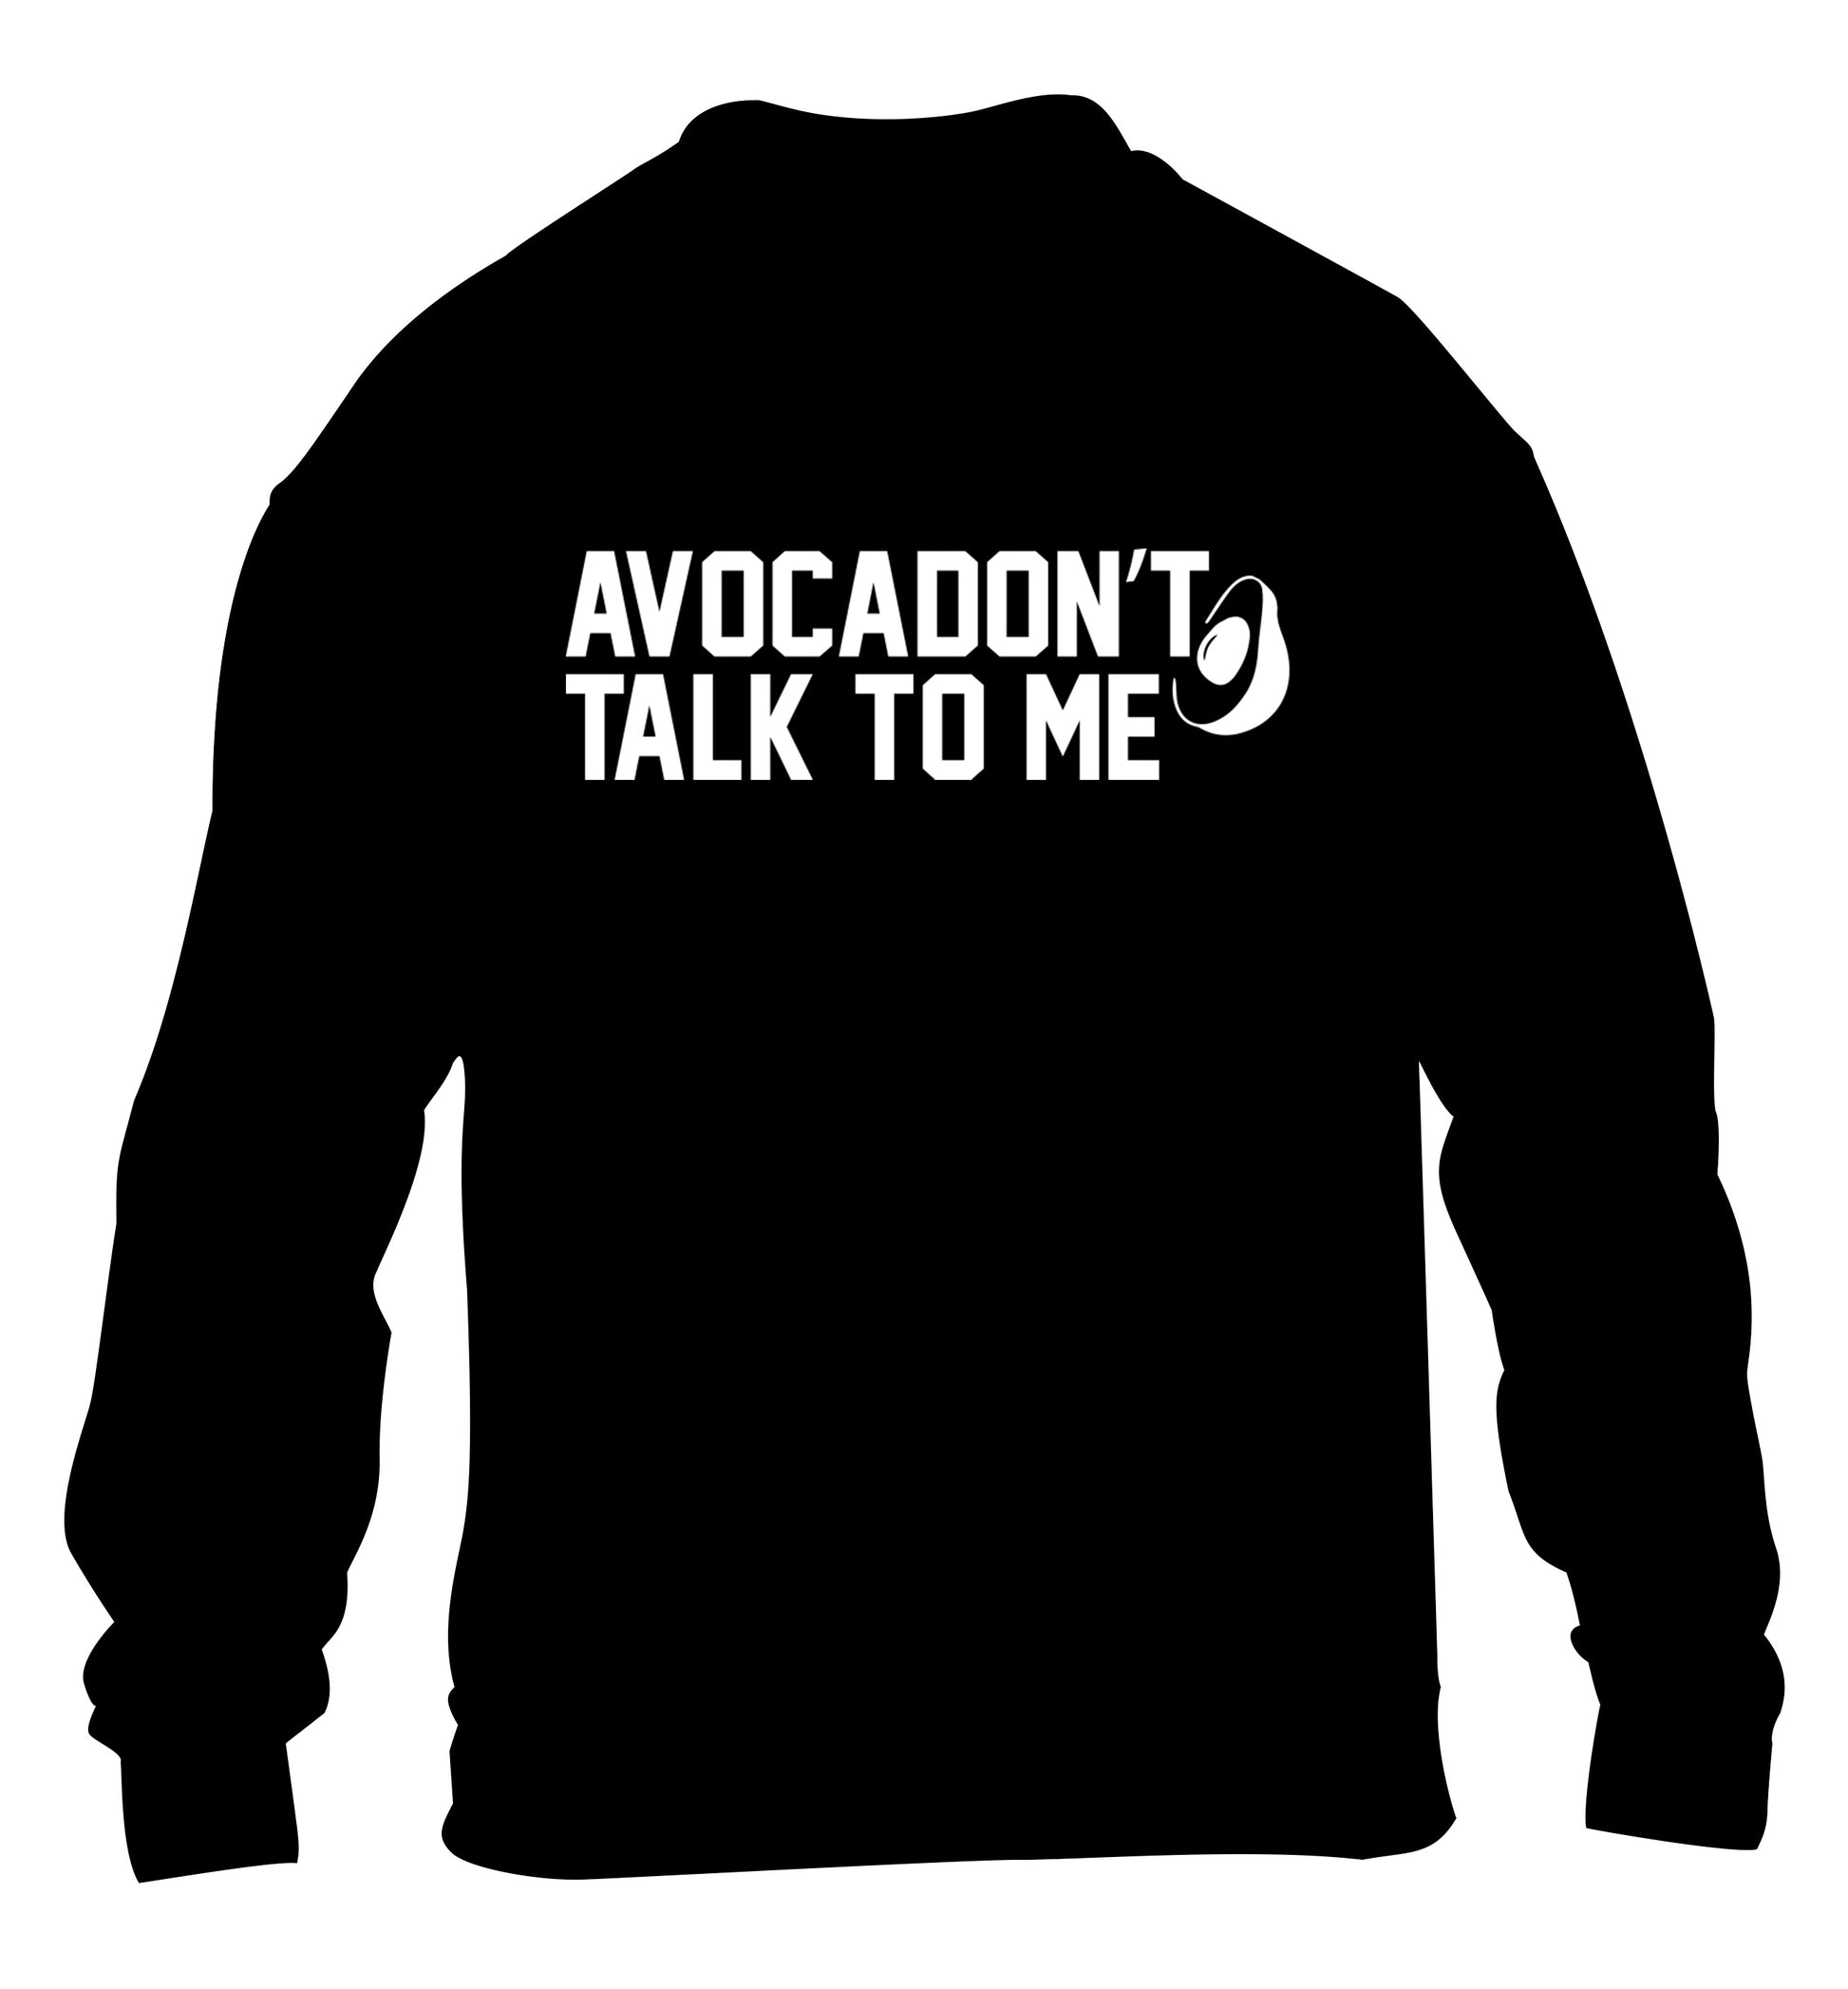 Avocadon't talk to me children's black sweater 12-14 Years